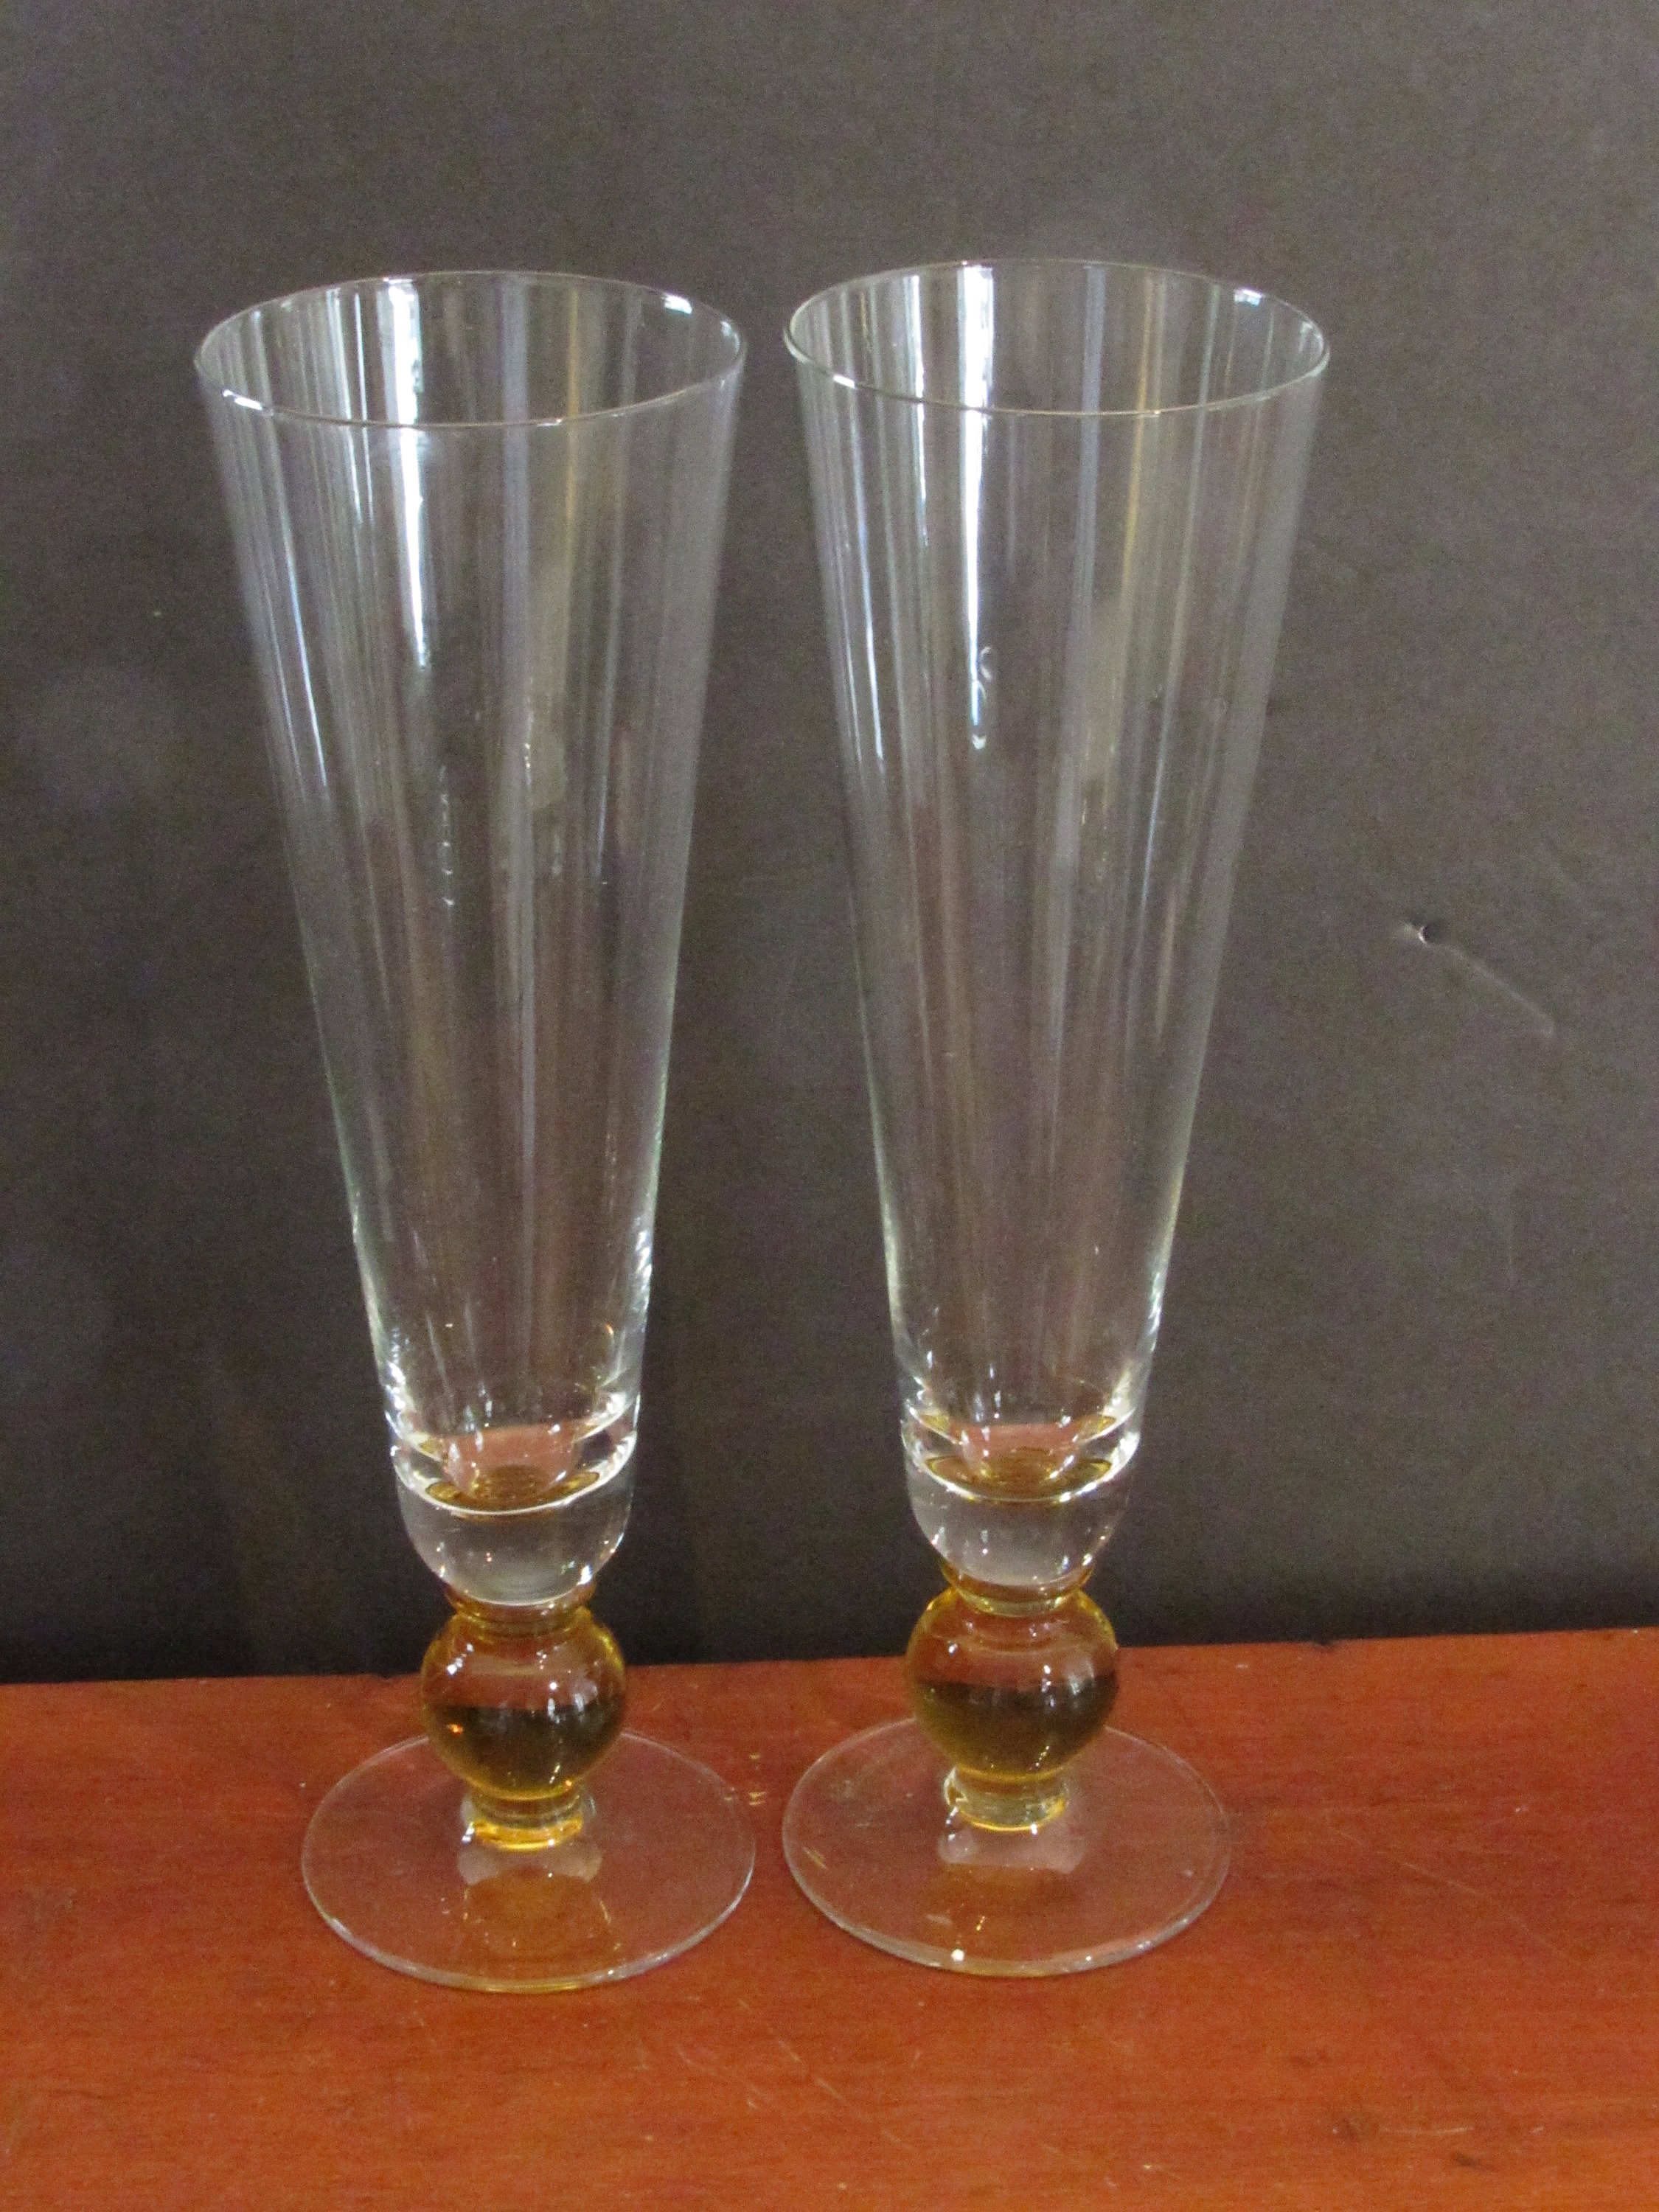 Premium Pilsner 1925 oz Beer Glasses Set of 4 Pint Glasses by Glavers, Tall Designed European Glass Tumbler Cups for Bar, Cocktails, Beer, Soda, Juice